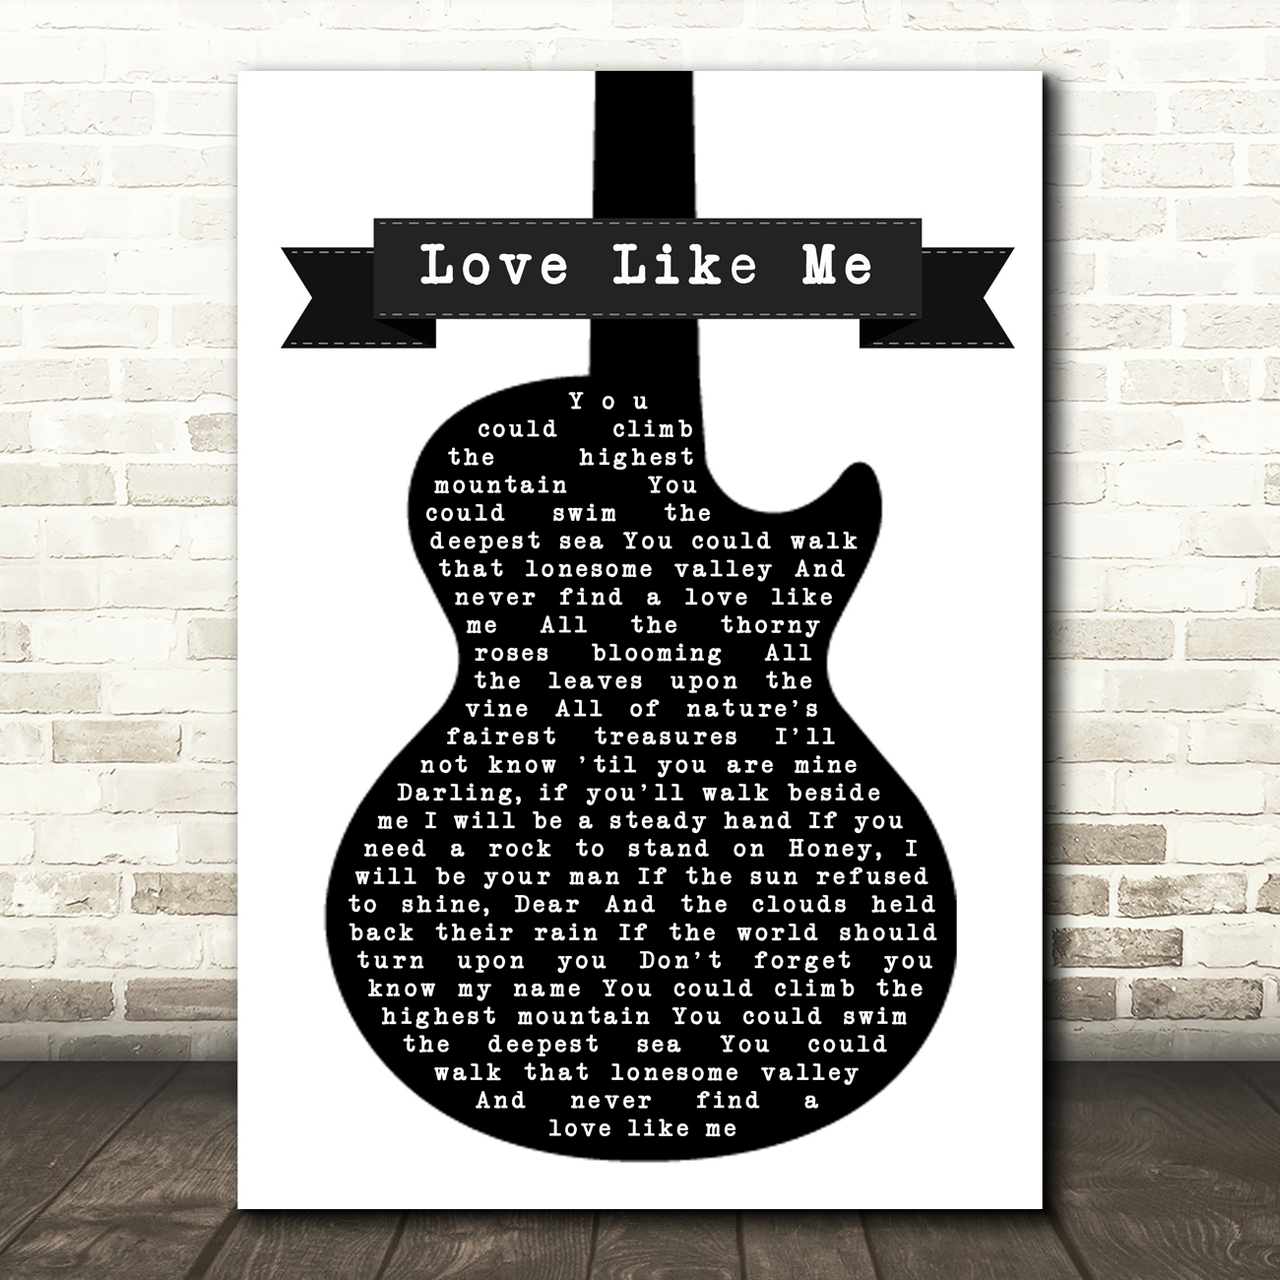 Billy Strings Love Like Me Black & White Guitar Song Lyric Wall Art Print